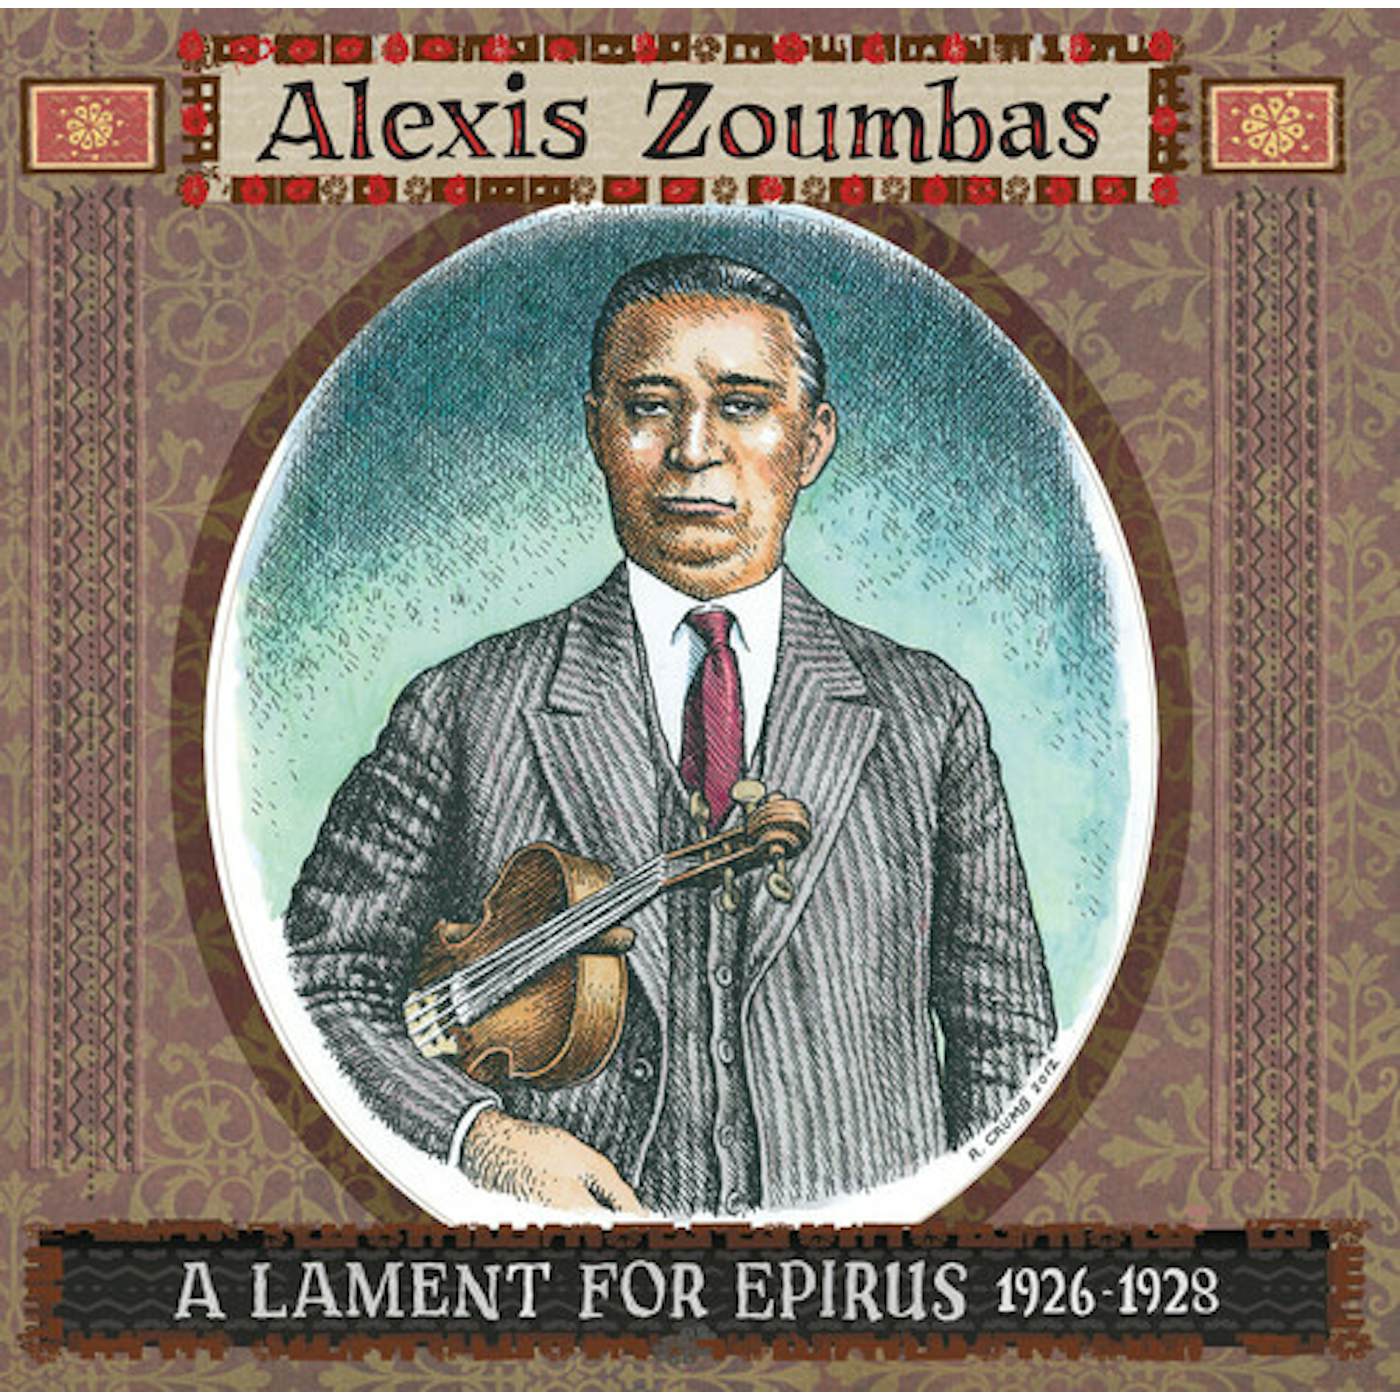 Alexis Zoumbas LAMENT FOR EPIRUS 1926-1928 Vinyl Record